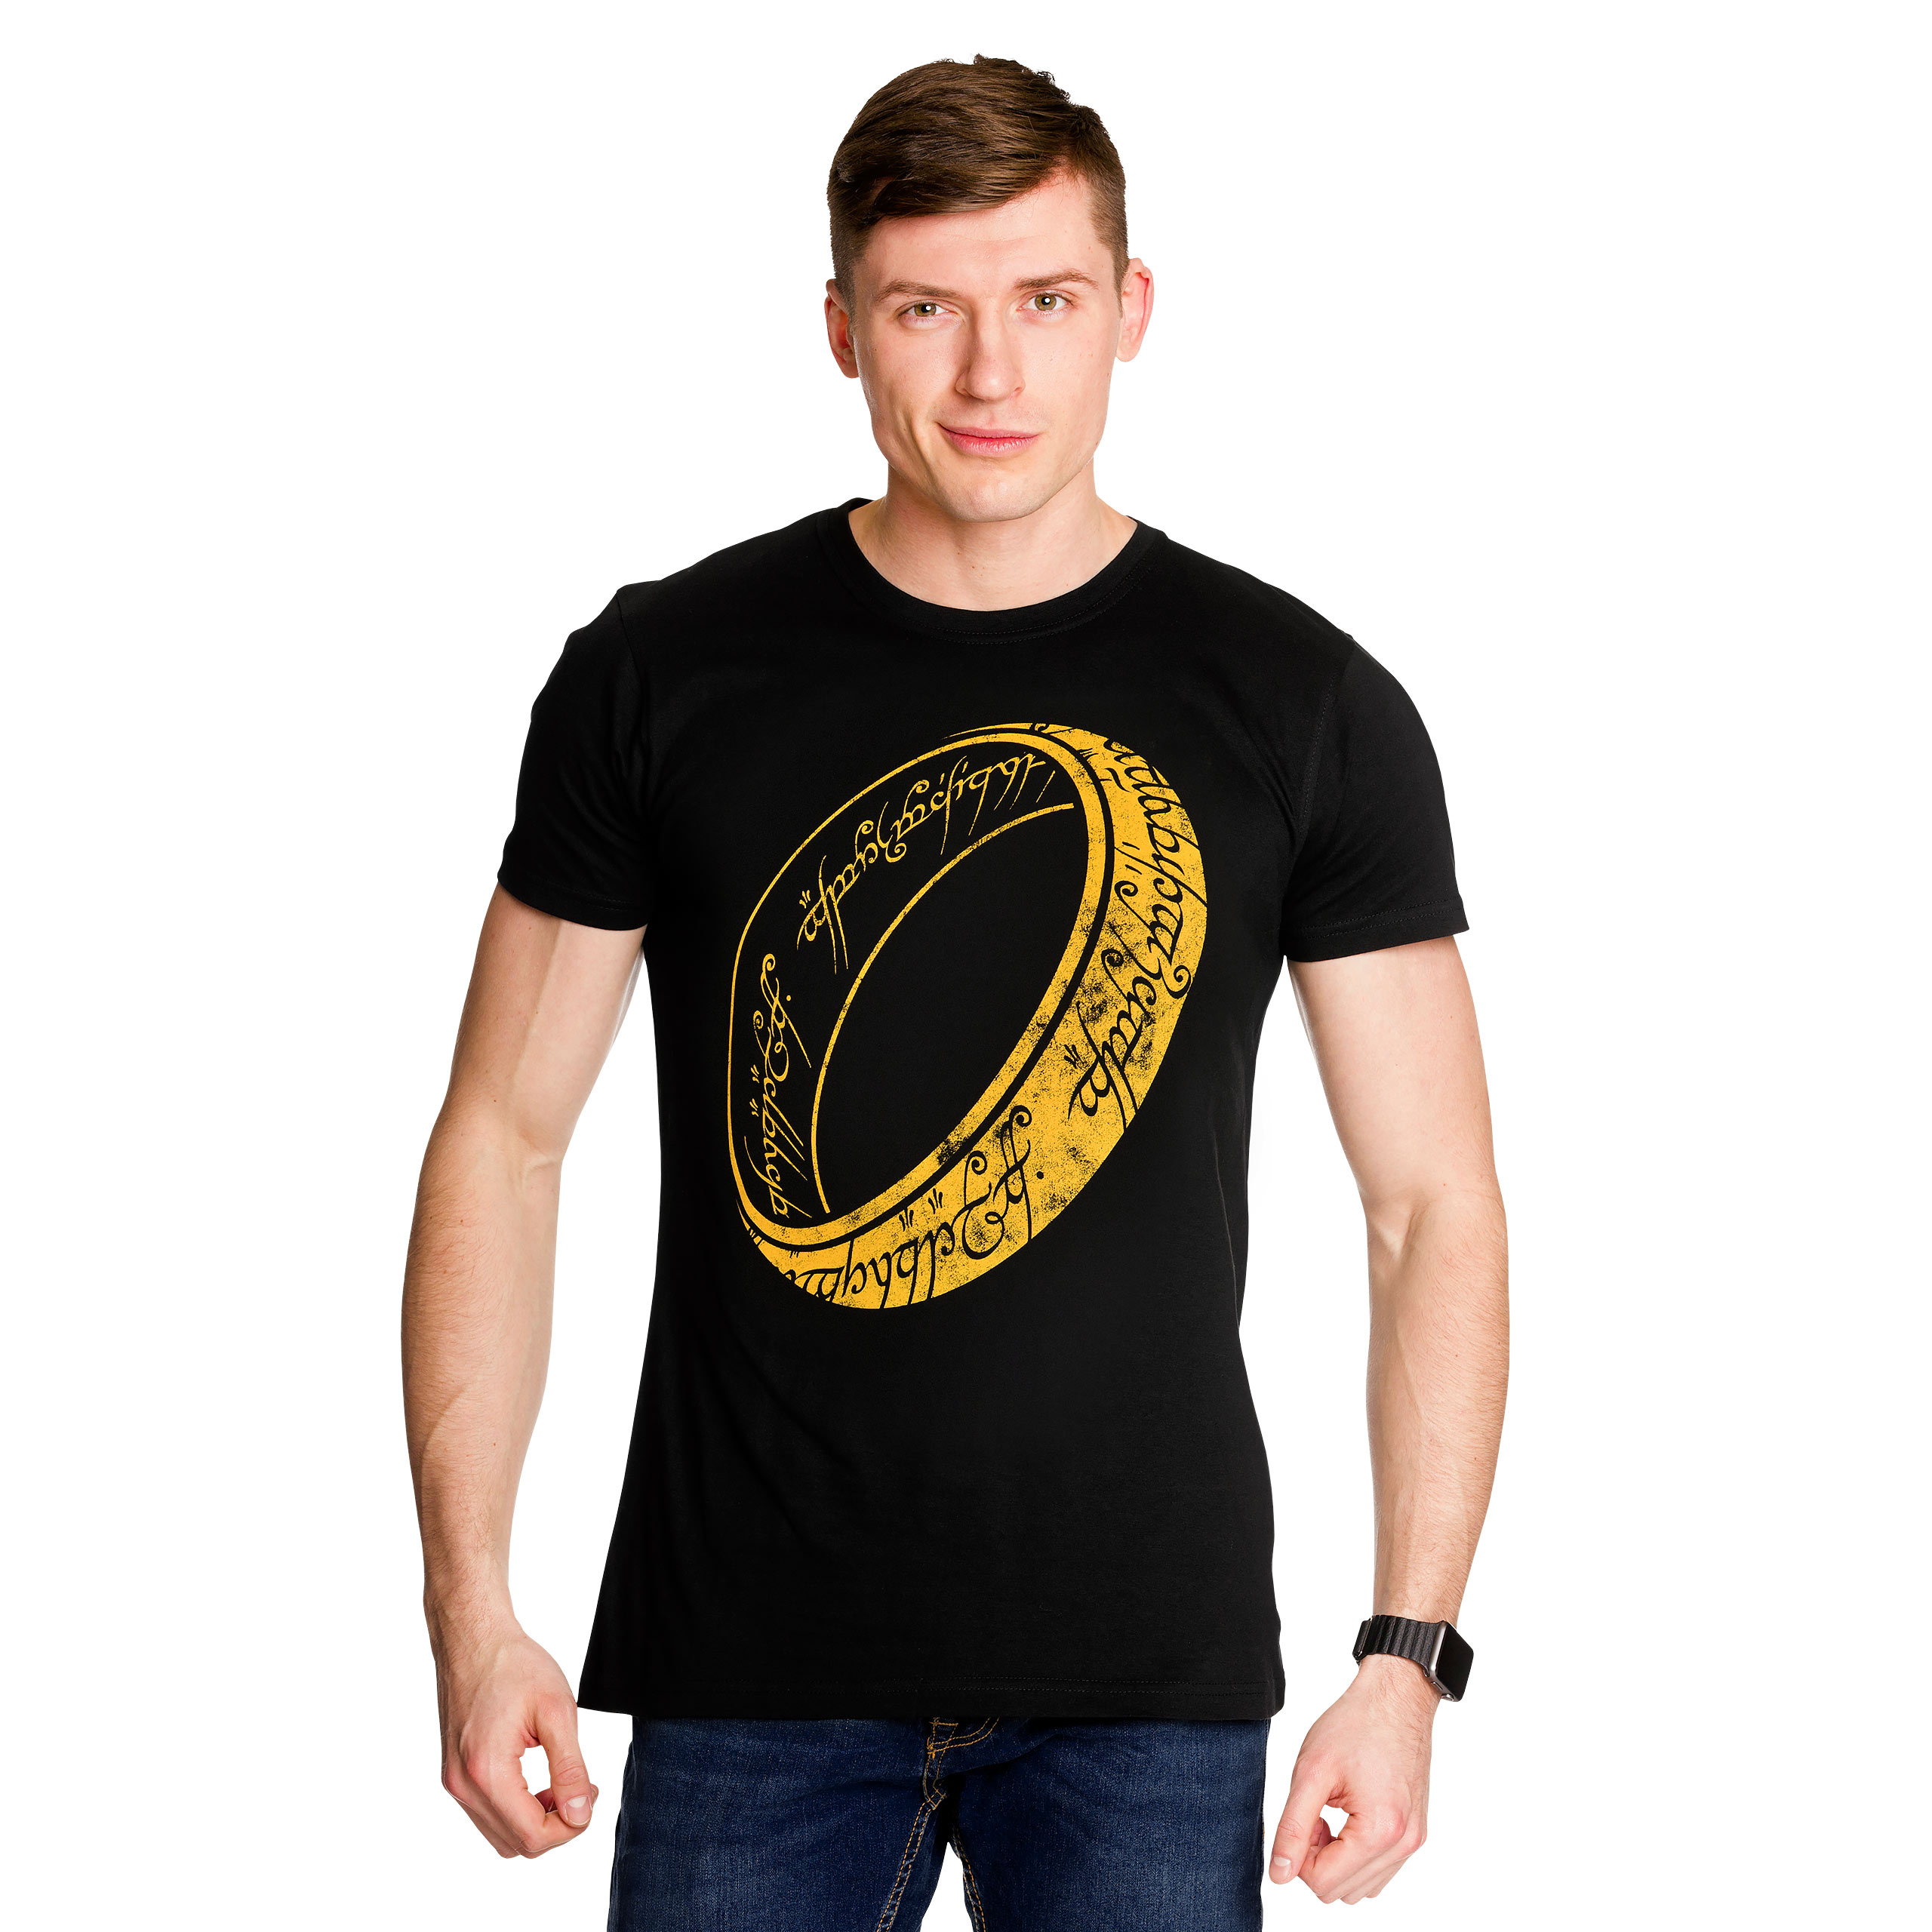 Heer der Ringen - One Ring to Rule T-Shirt Zwart